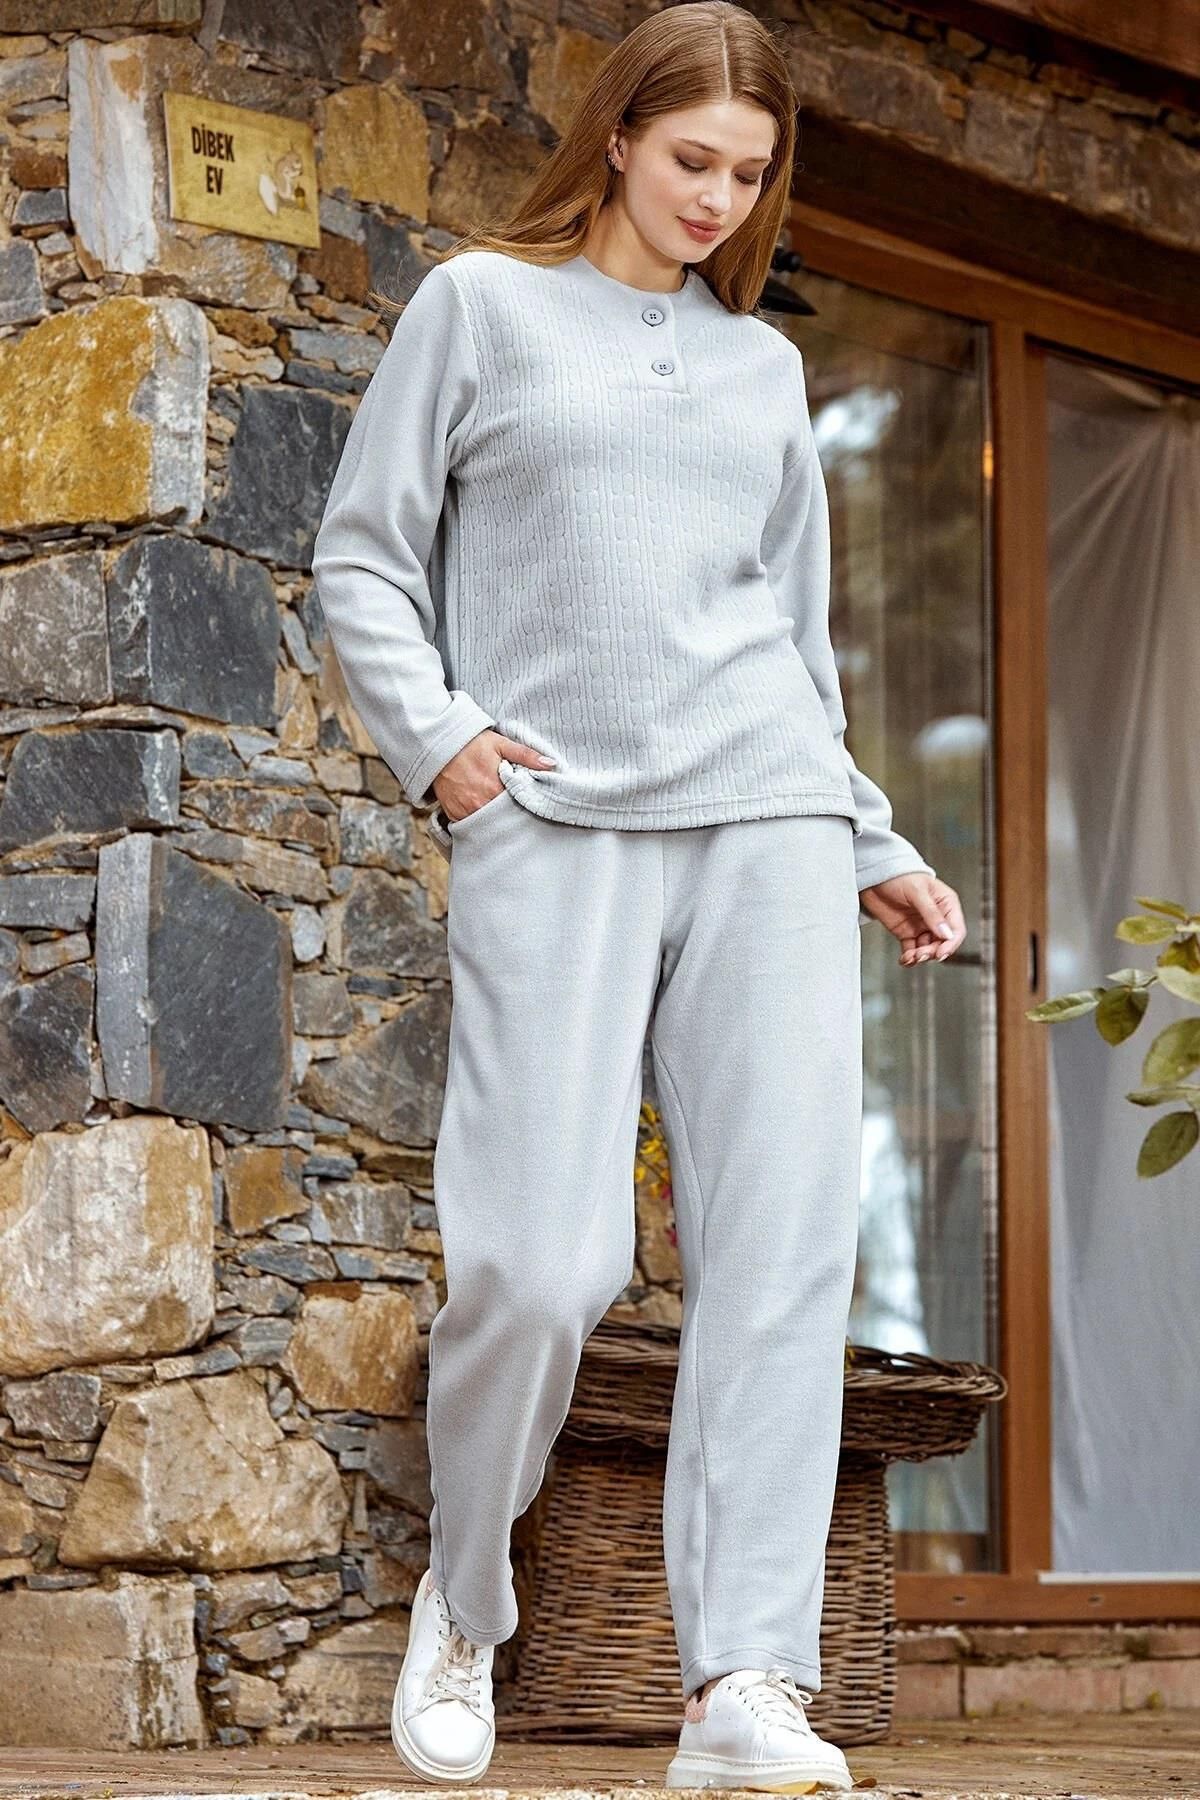 Cossy By Aqua Women's Fleece Pajama Set